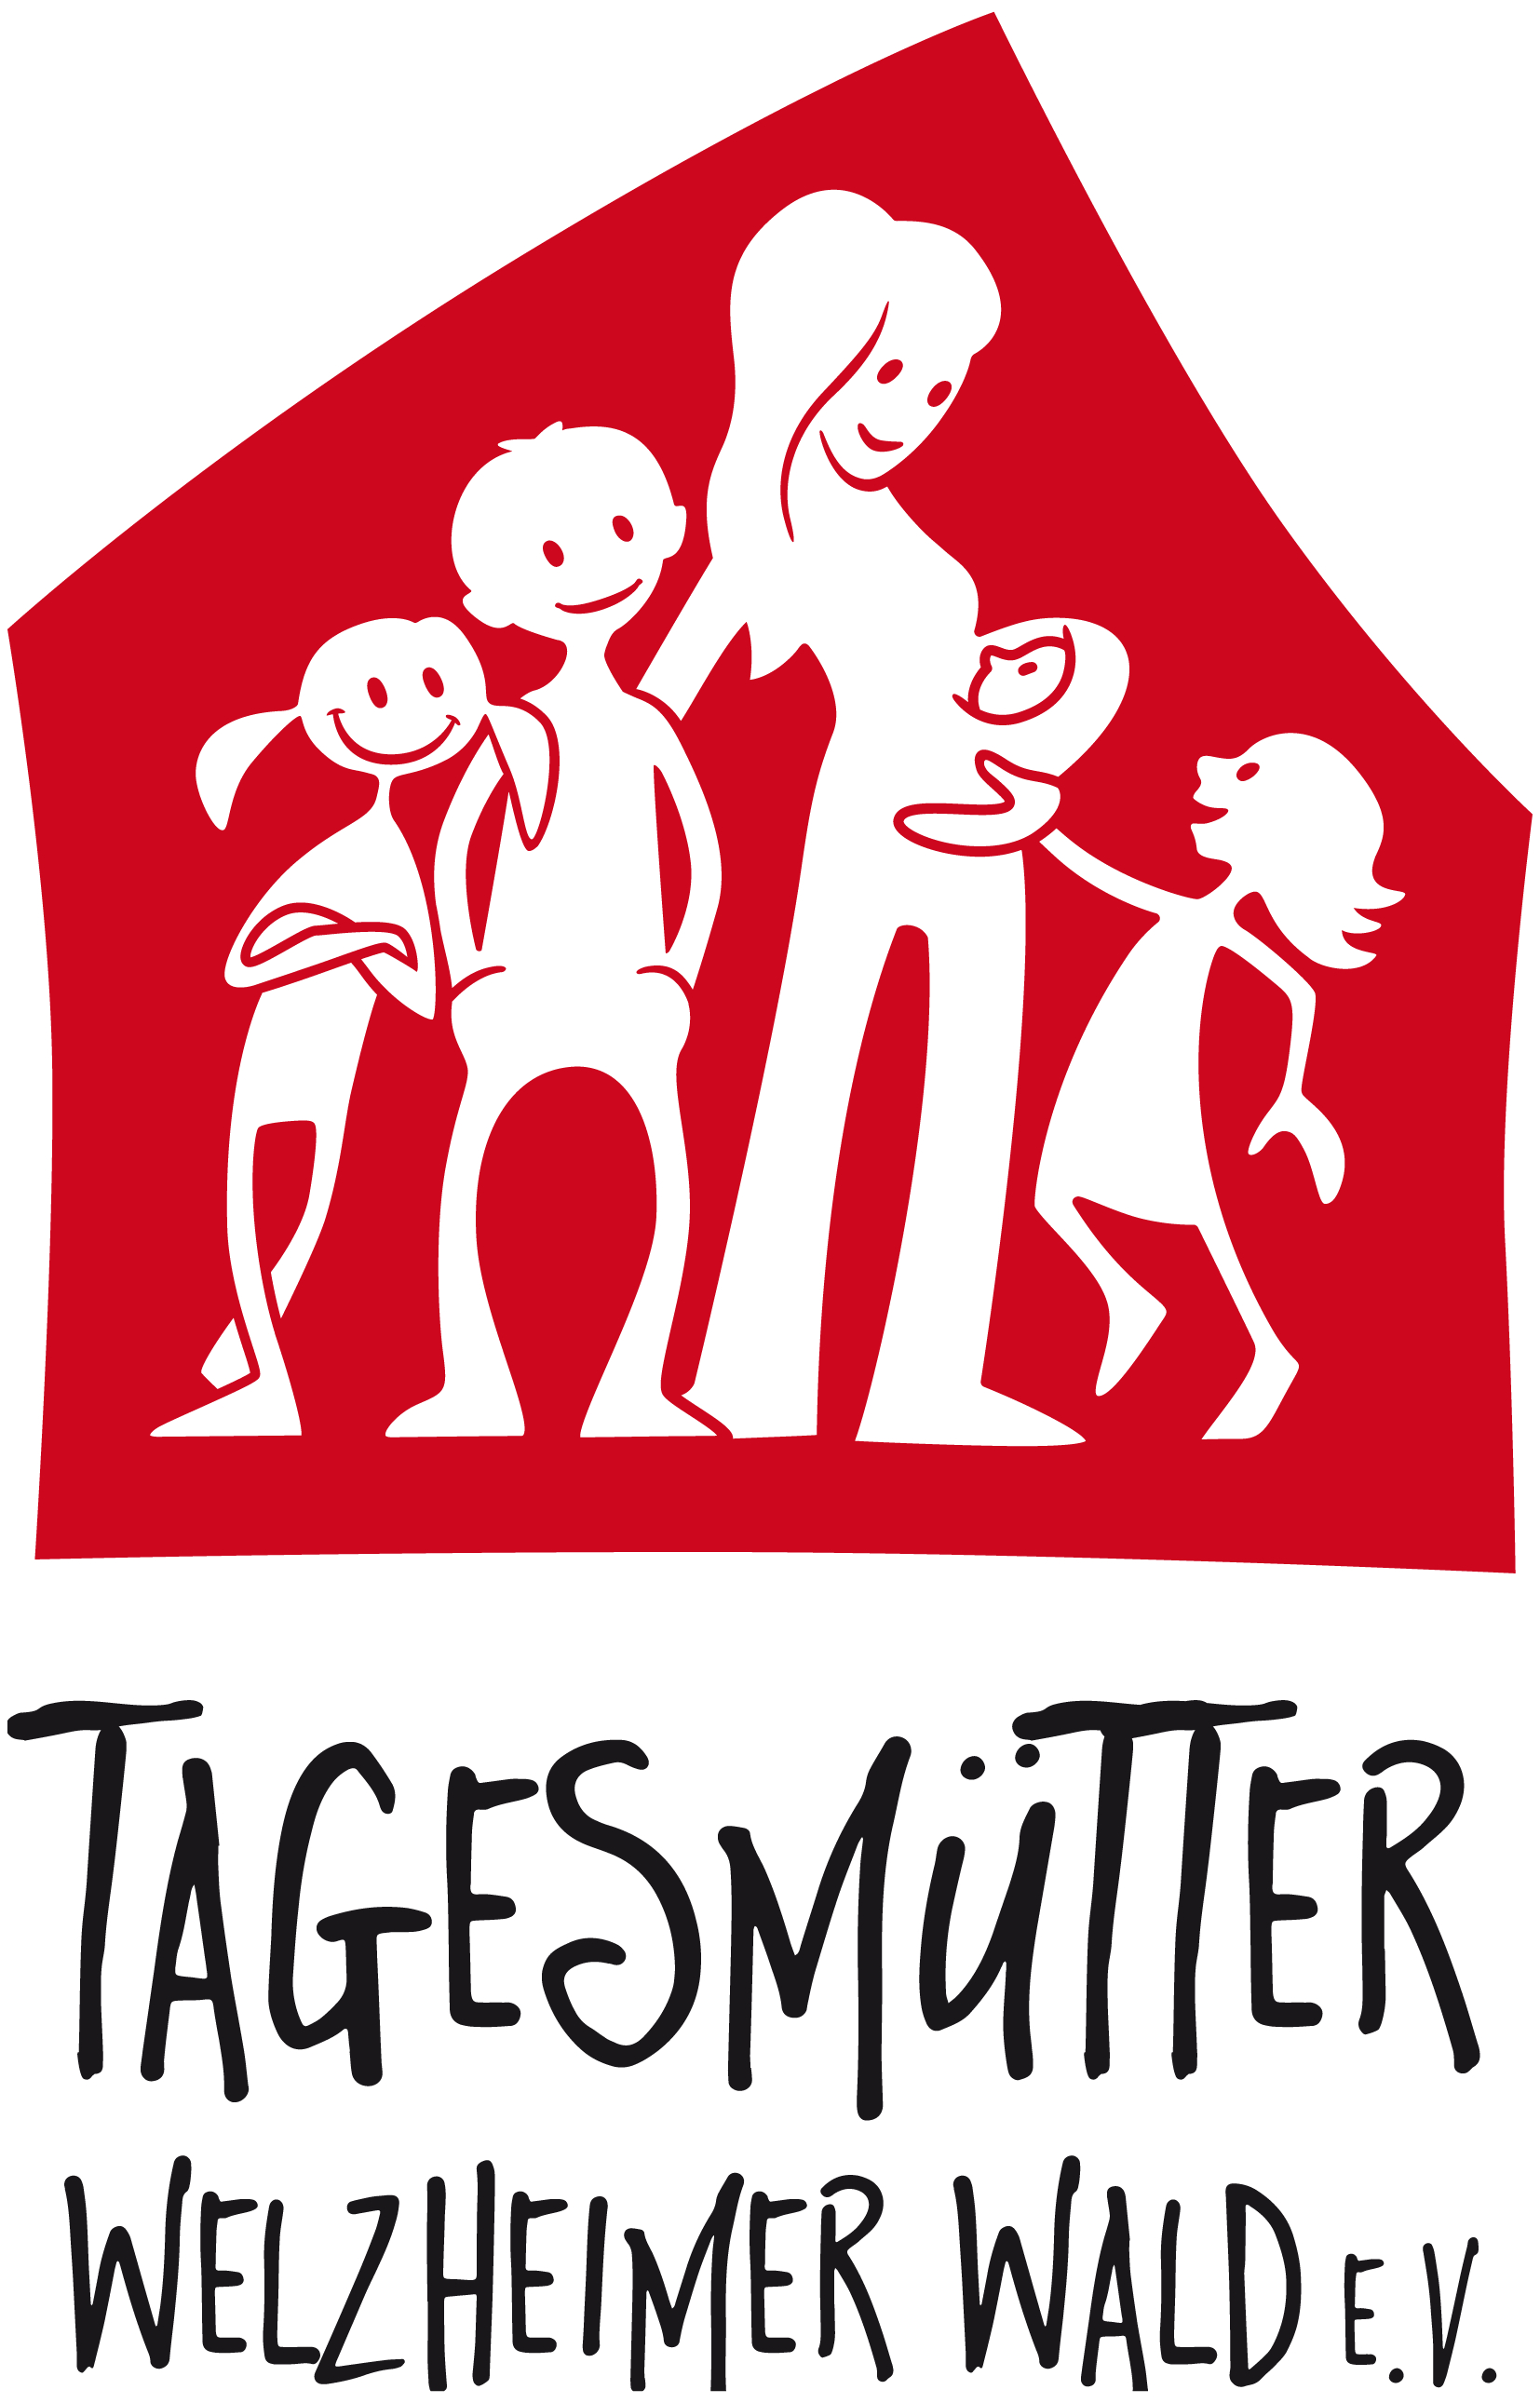 Logo Tagesmütter